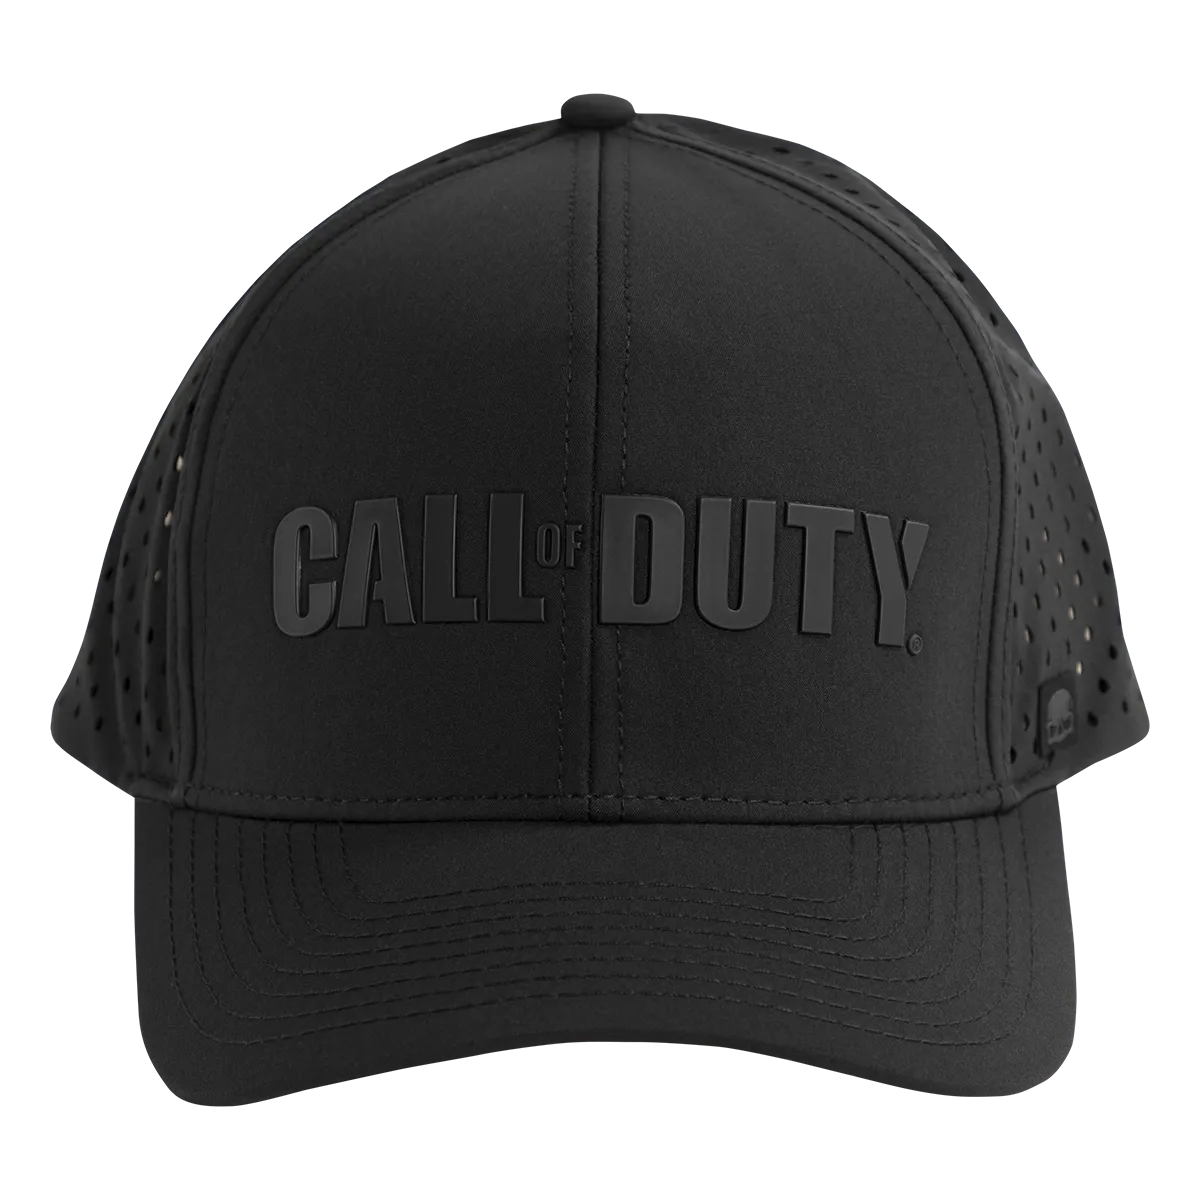 Call of Duty Baseball Cap "Stealth" Black